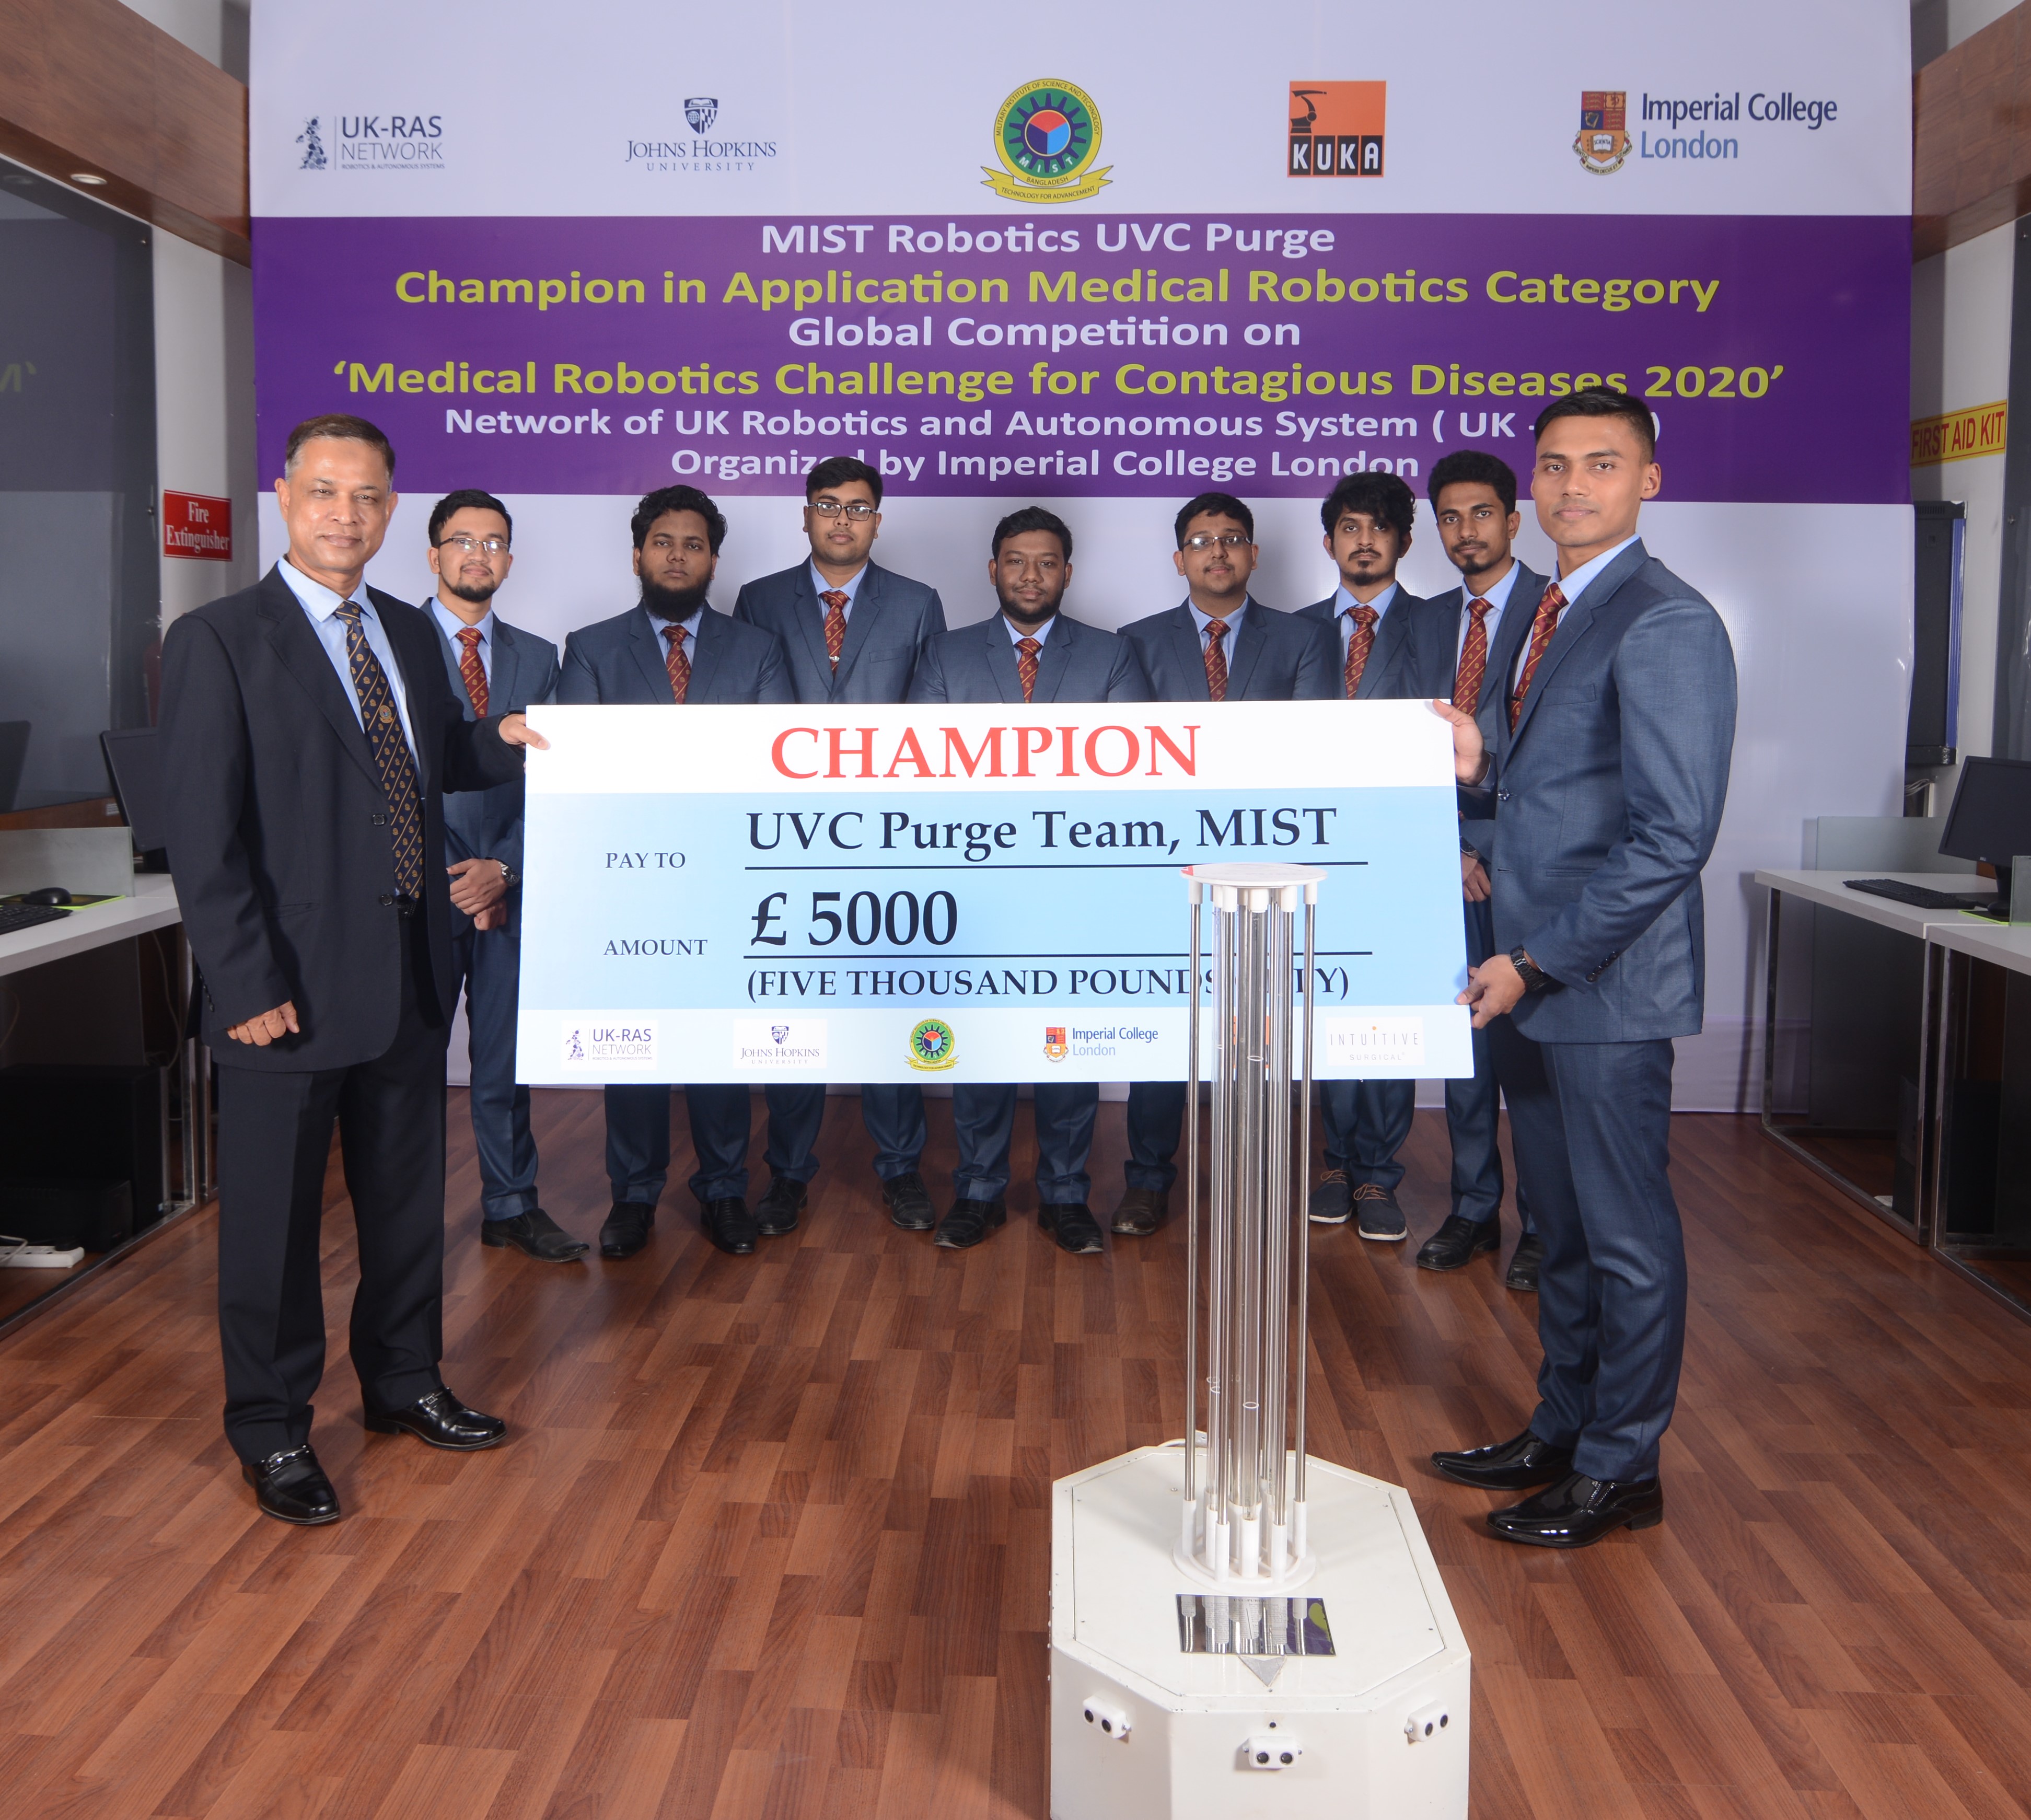 Team MIST ‘UVC-PURGE’ wins championship in Medical Robotics Challenge for Contagious Disease 2020